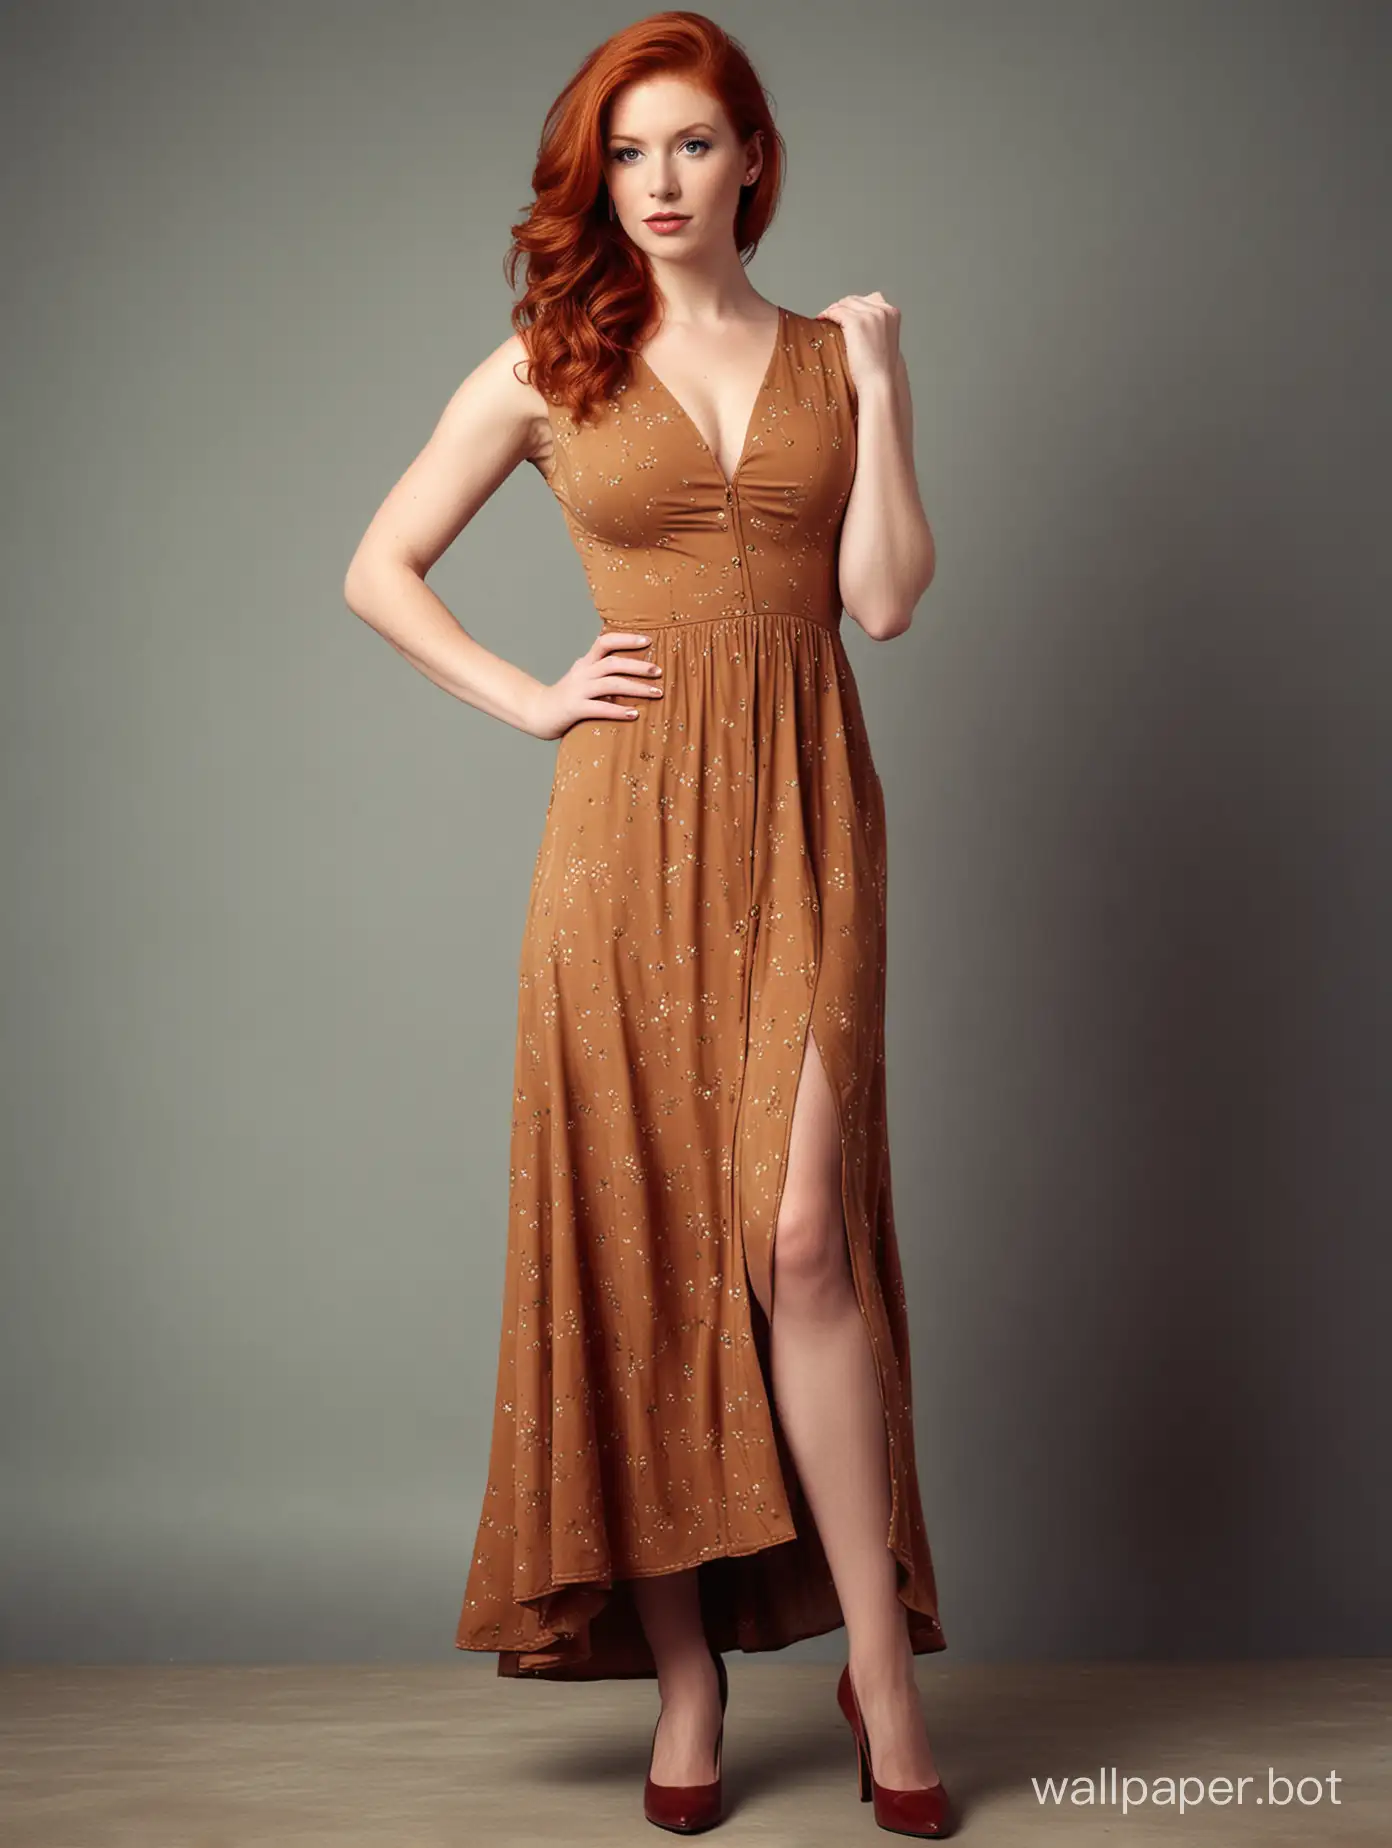 Elegant-Redhead-Woman-in-Vintage-Sleeveless-Dress-and-Heels